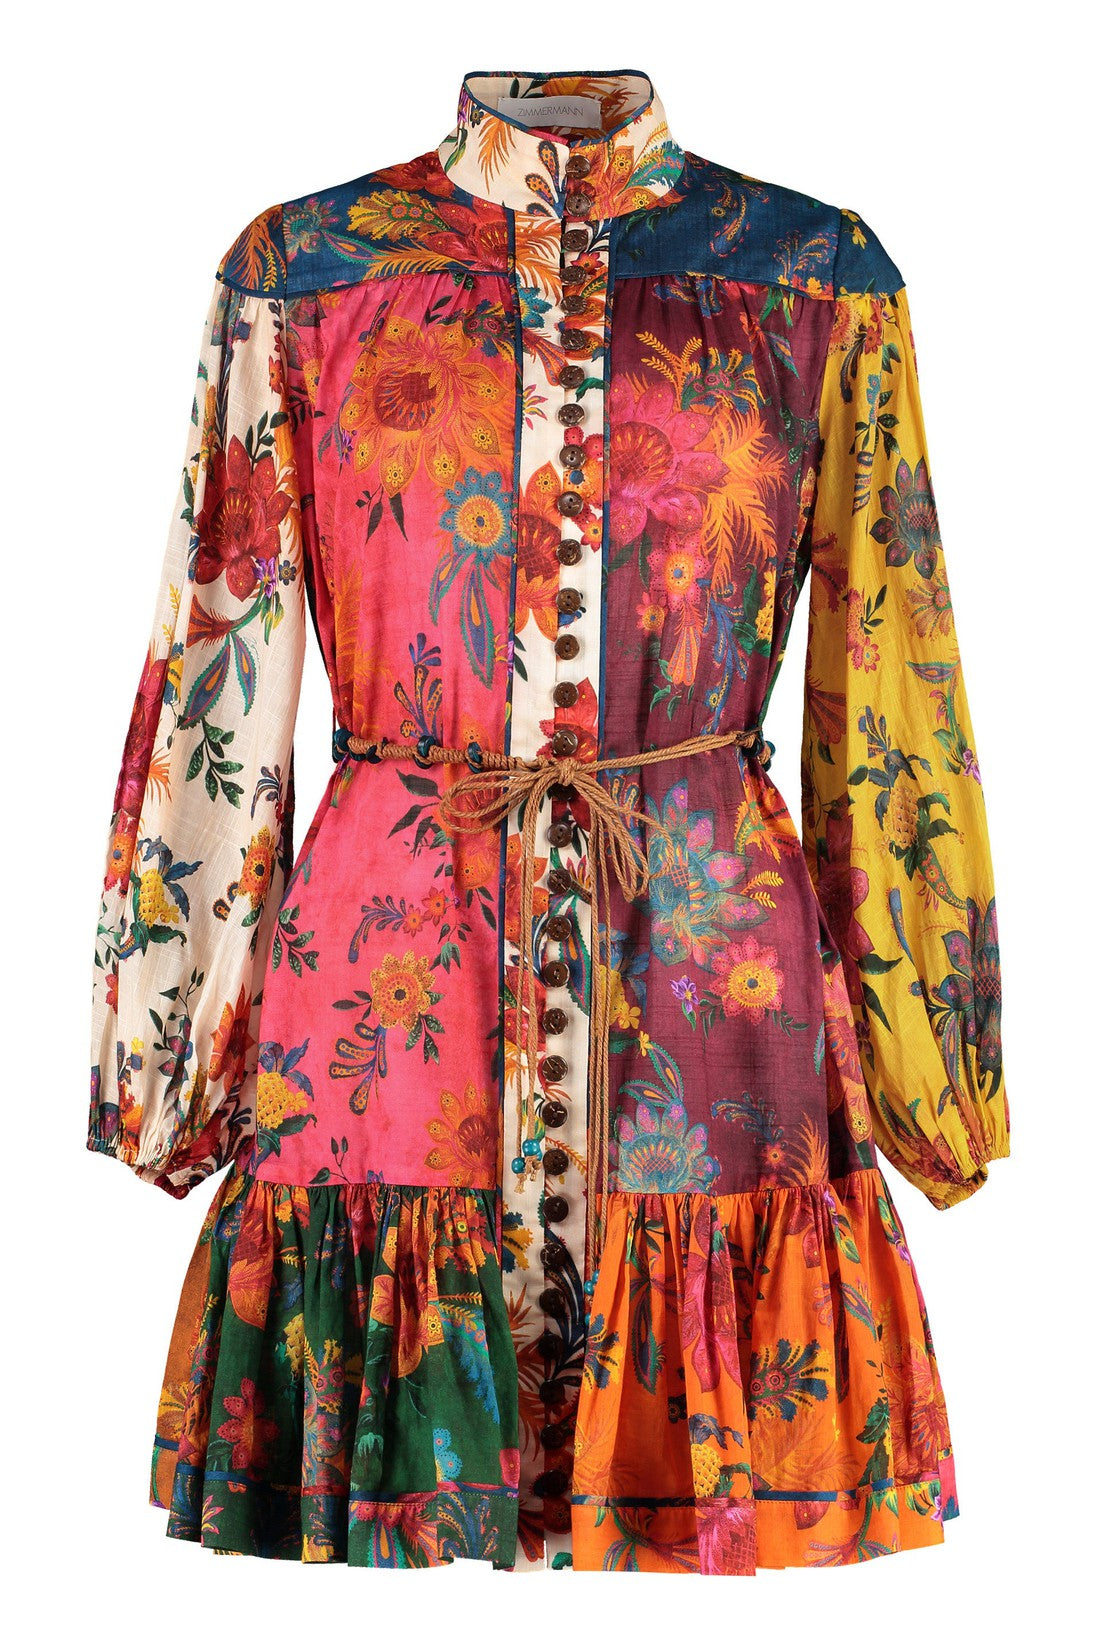 Zimmermann-OUTLET-SALE-Ginger floral cotton dress-ARCHIVIST